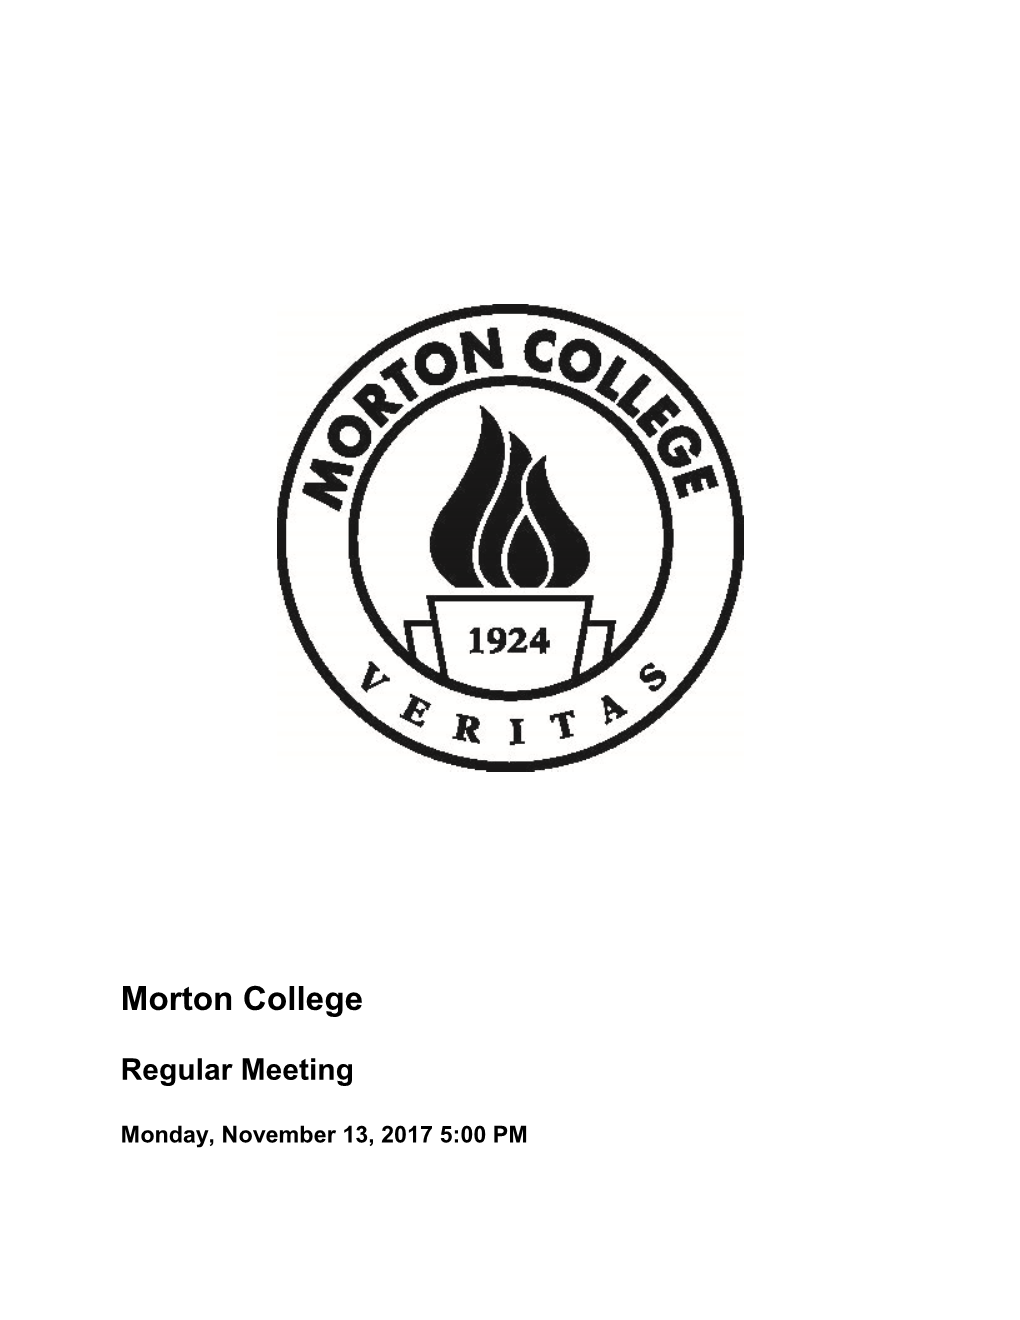 Morton College Regular Meeting